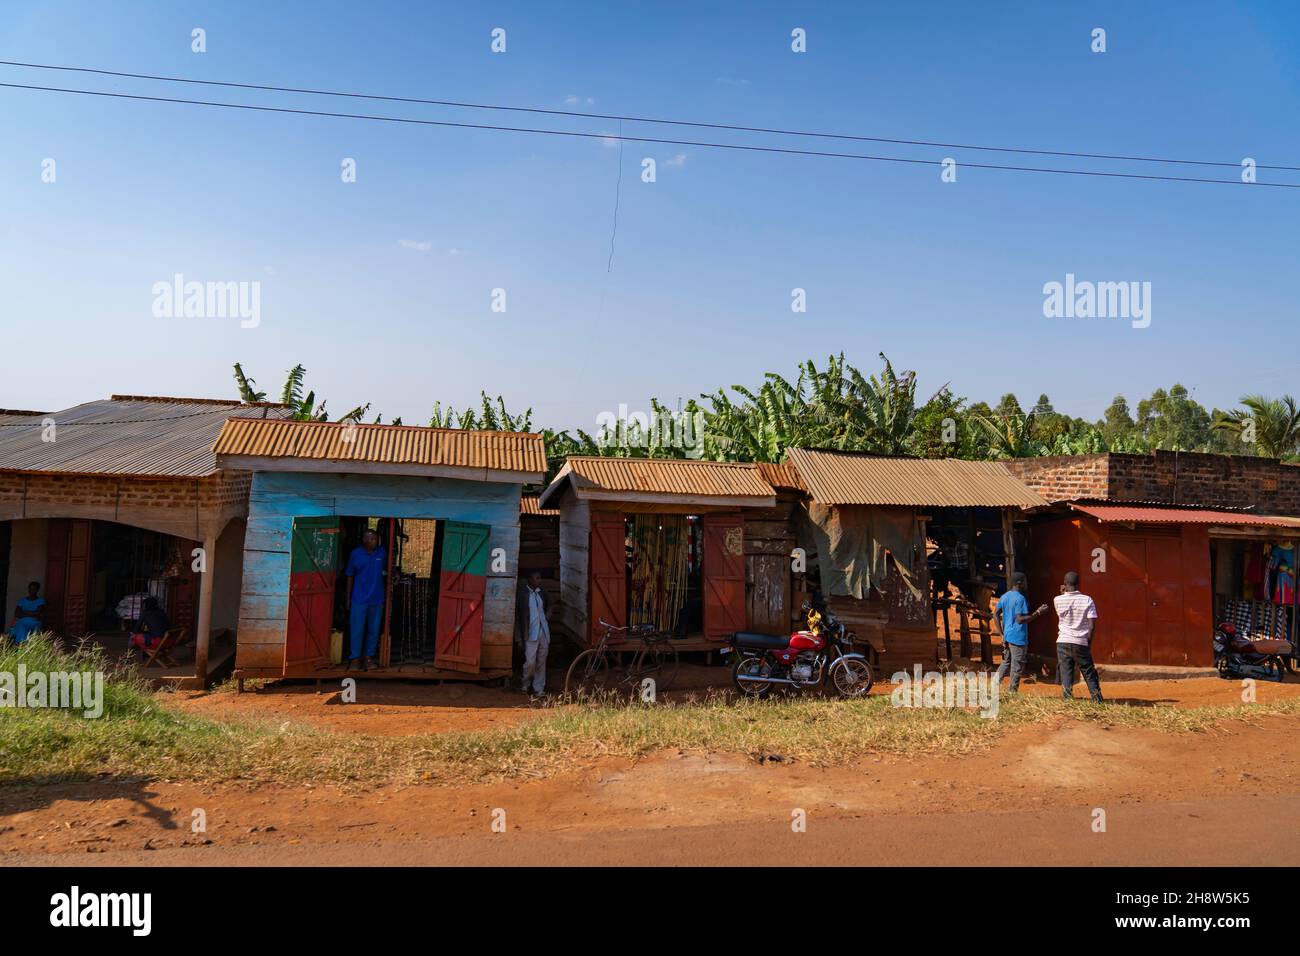 African village near road. Stock Photo